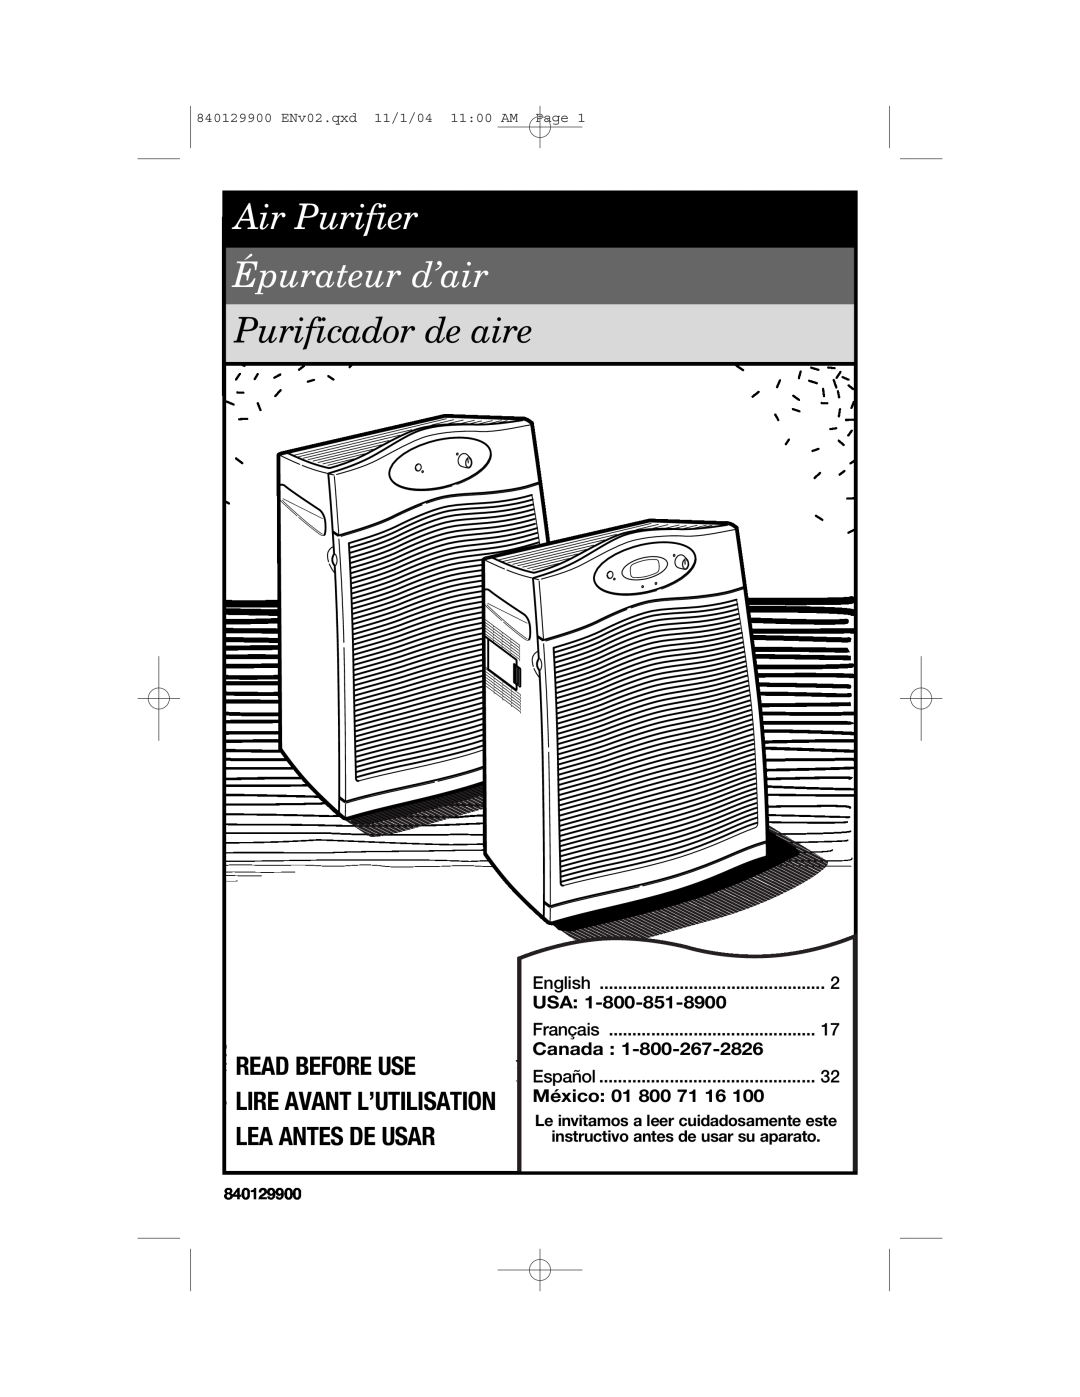 Hamilton Beach 04160 manual Read Before Use, Lire Avant L’Utilisation Lea Antes De Usar, Air Purifier Épurateur d’air 